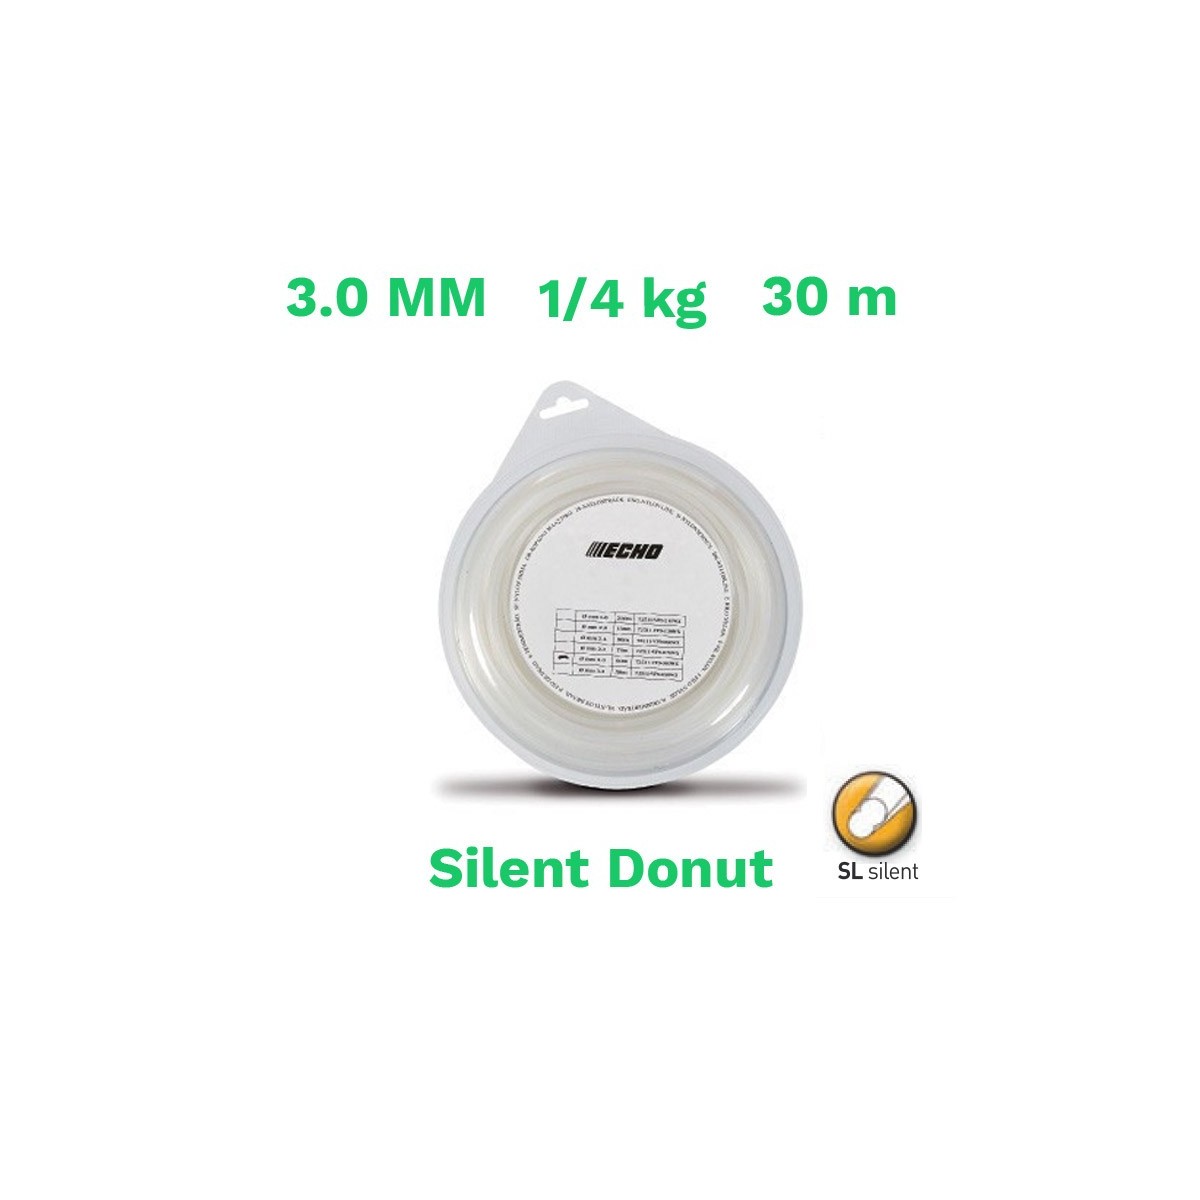 Echo hilo nylon silent donut 3.0mm 1/4 kg 30 m